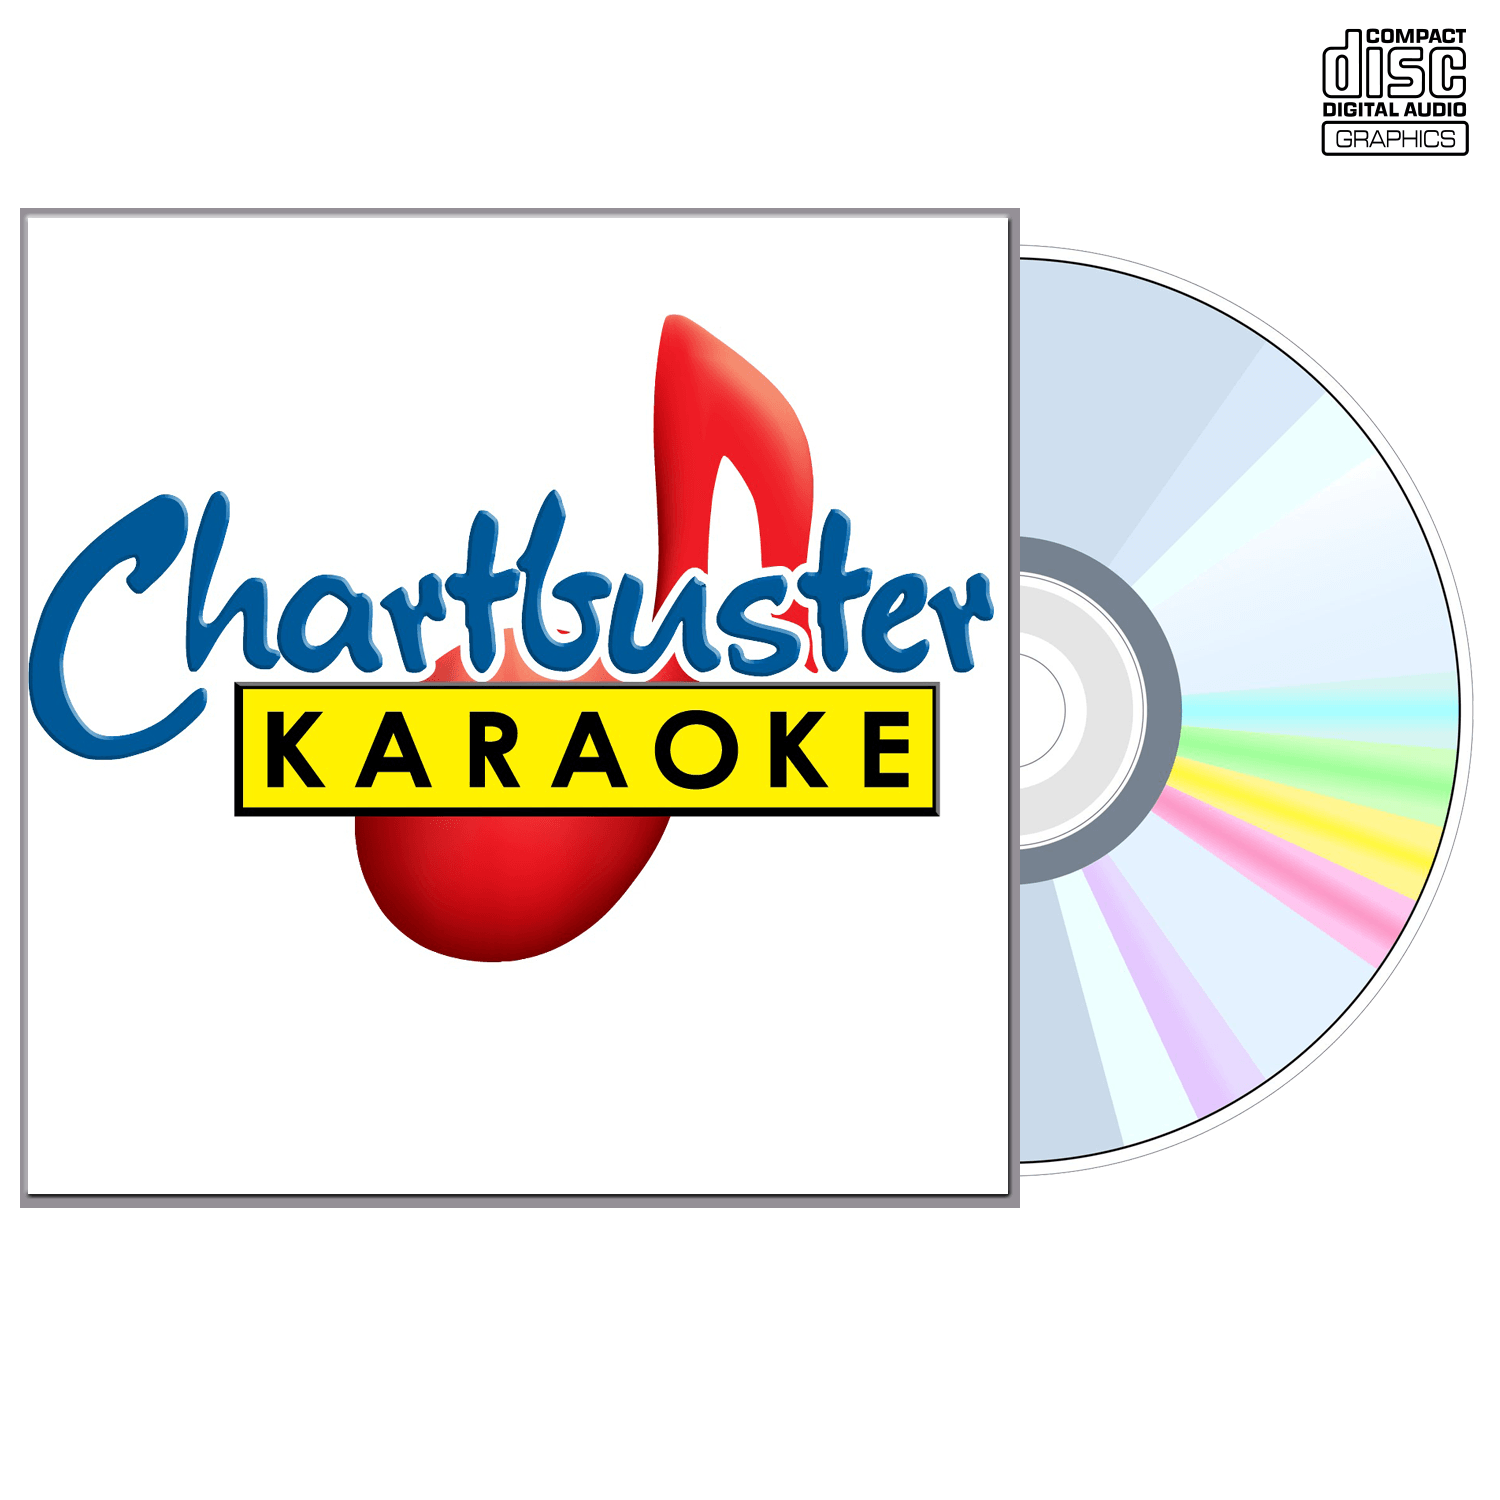 Wet Willie - CD+G - Chartbuster Karaoke - Karaoke Home Entertainment